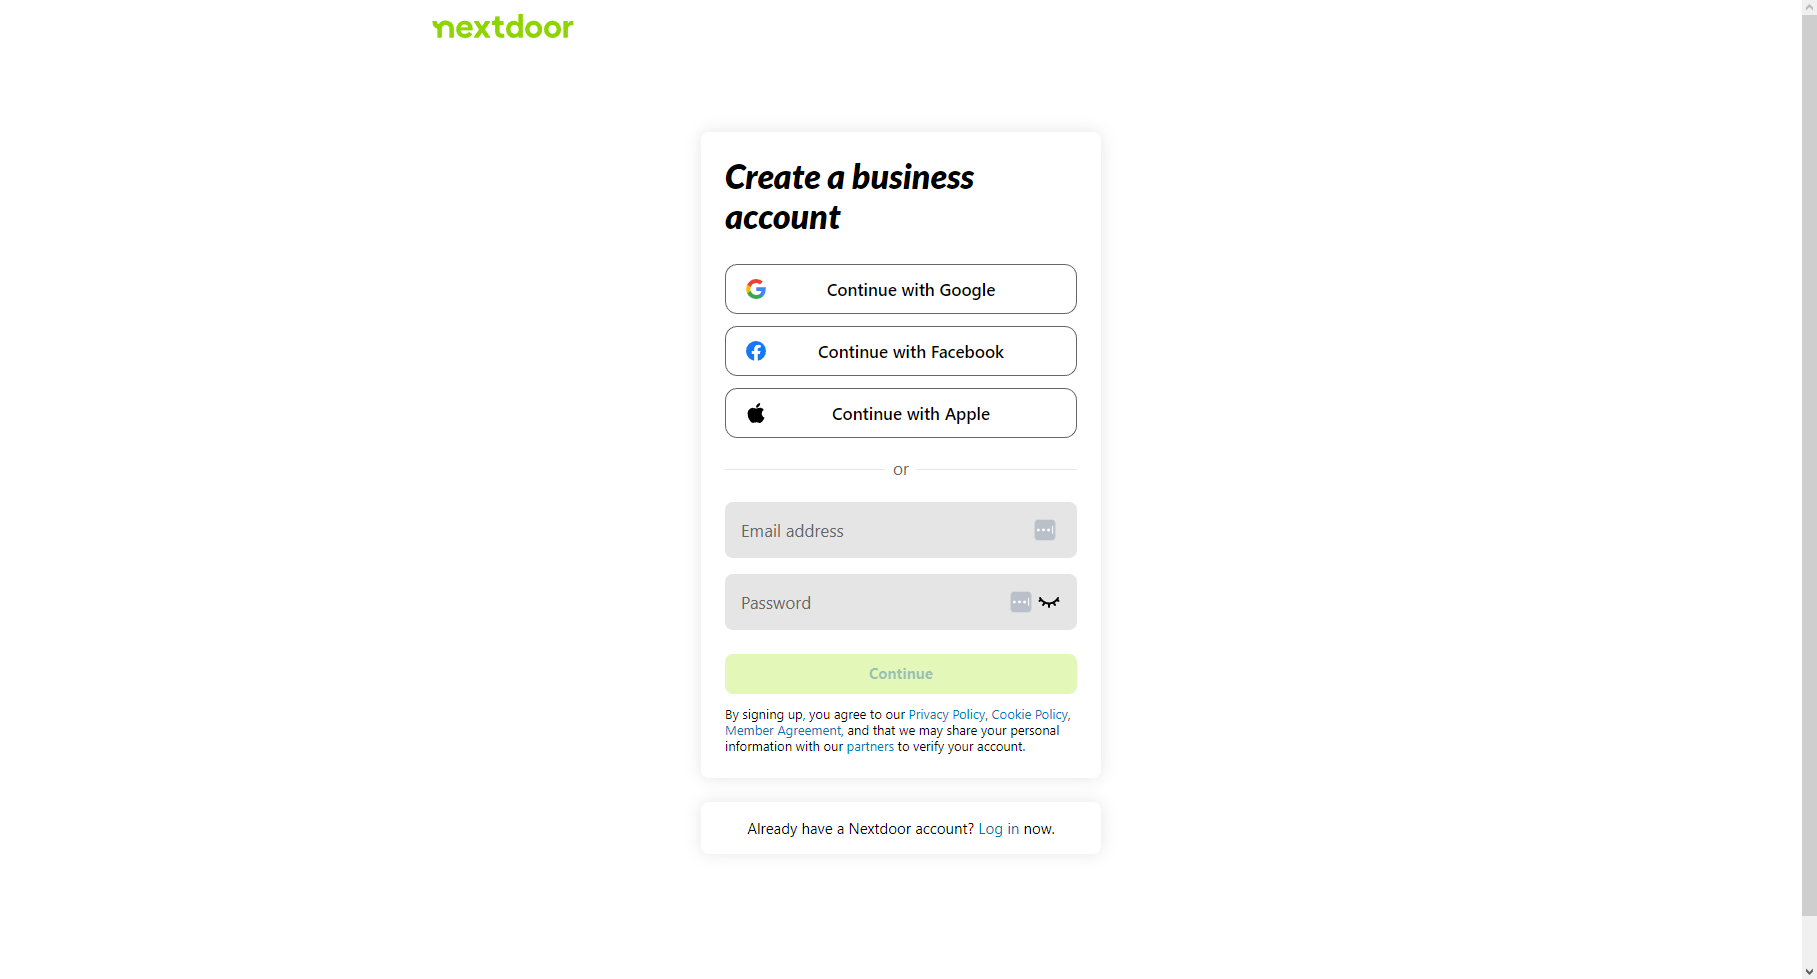 screenshot of Nextdoor create a business account page